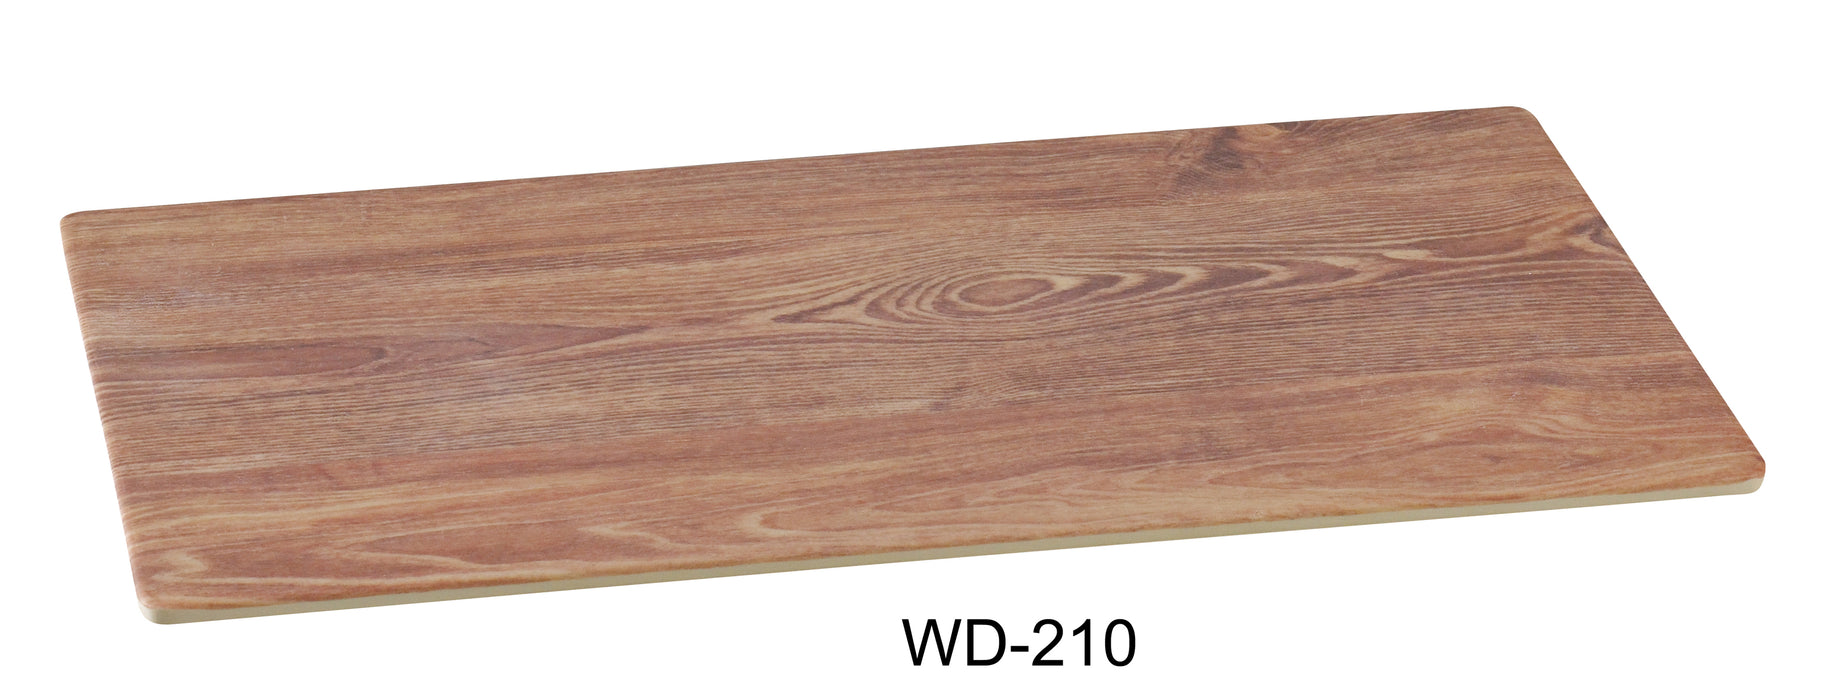 Yanco WD-210 Rectangular Wooden Tray, Melamine, Pack of 24 (2 Dz)